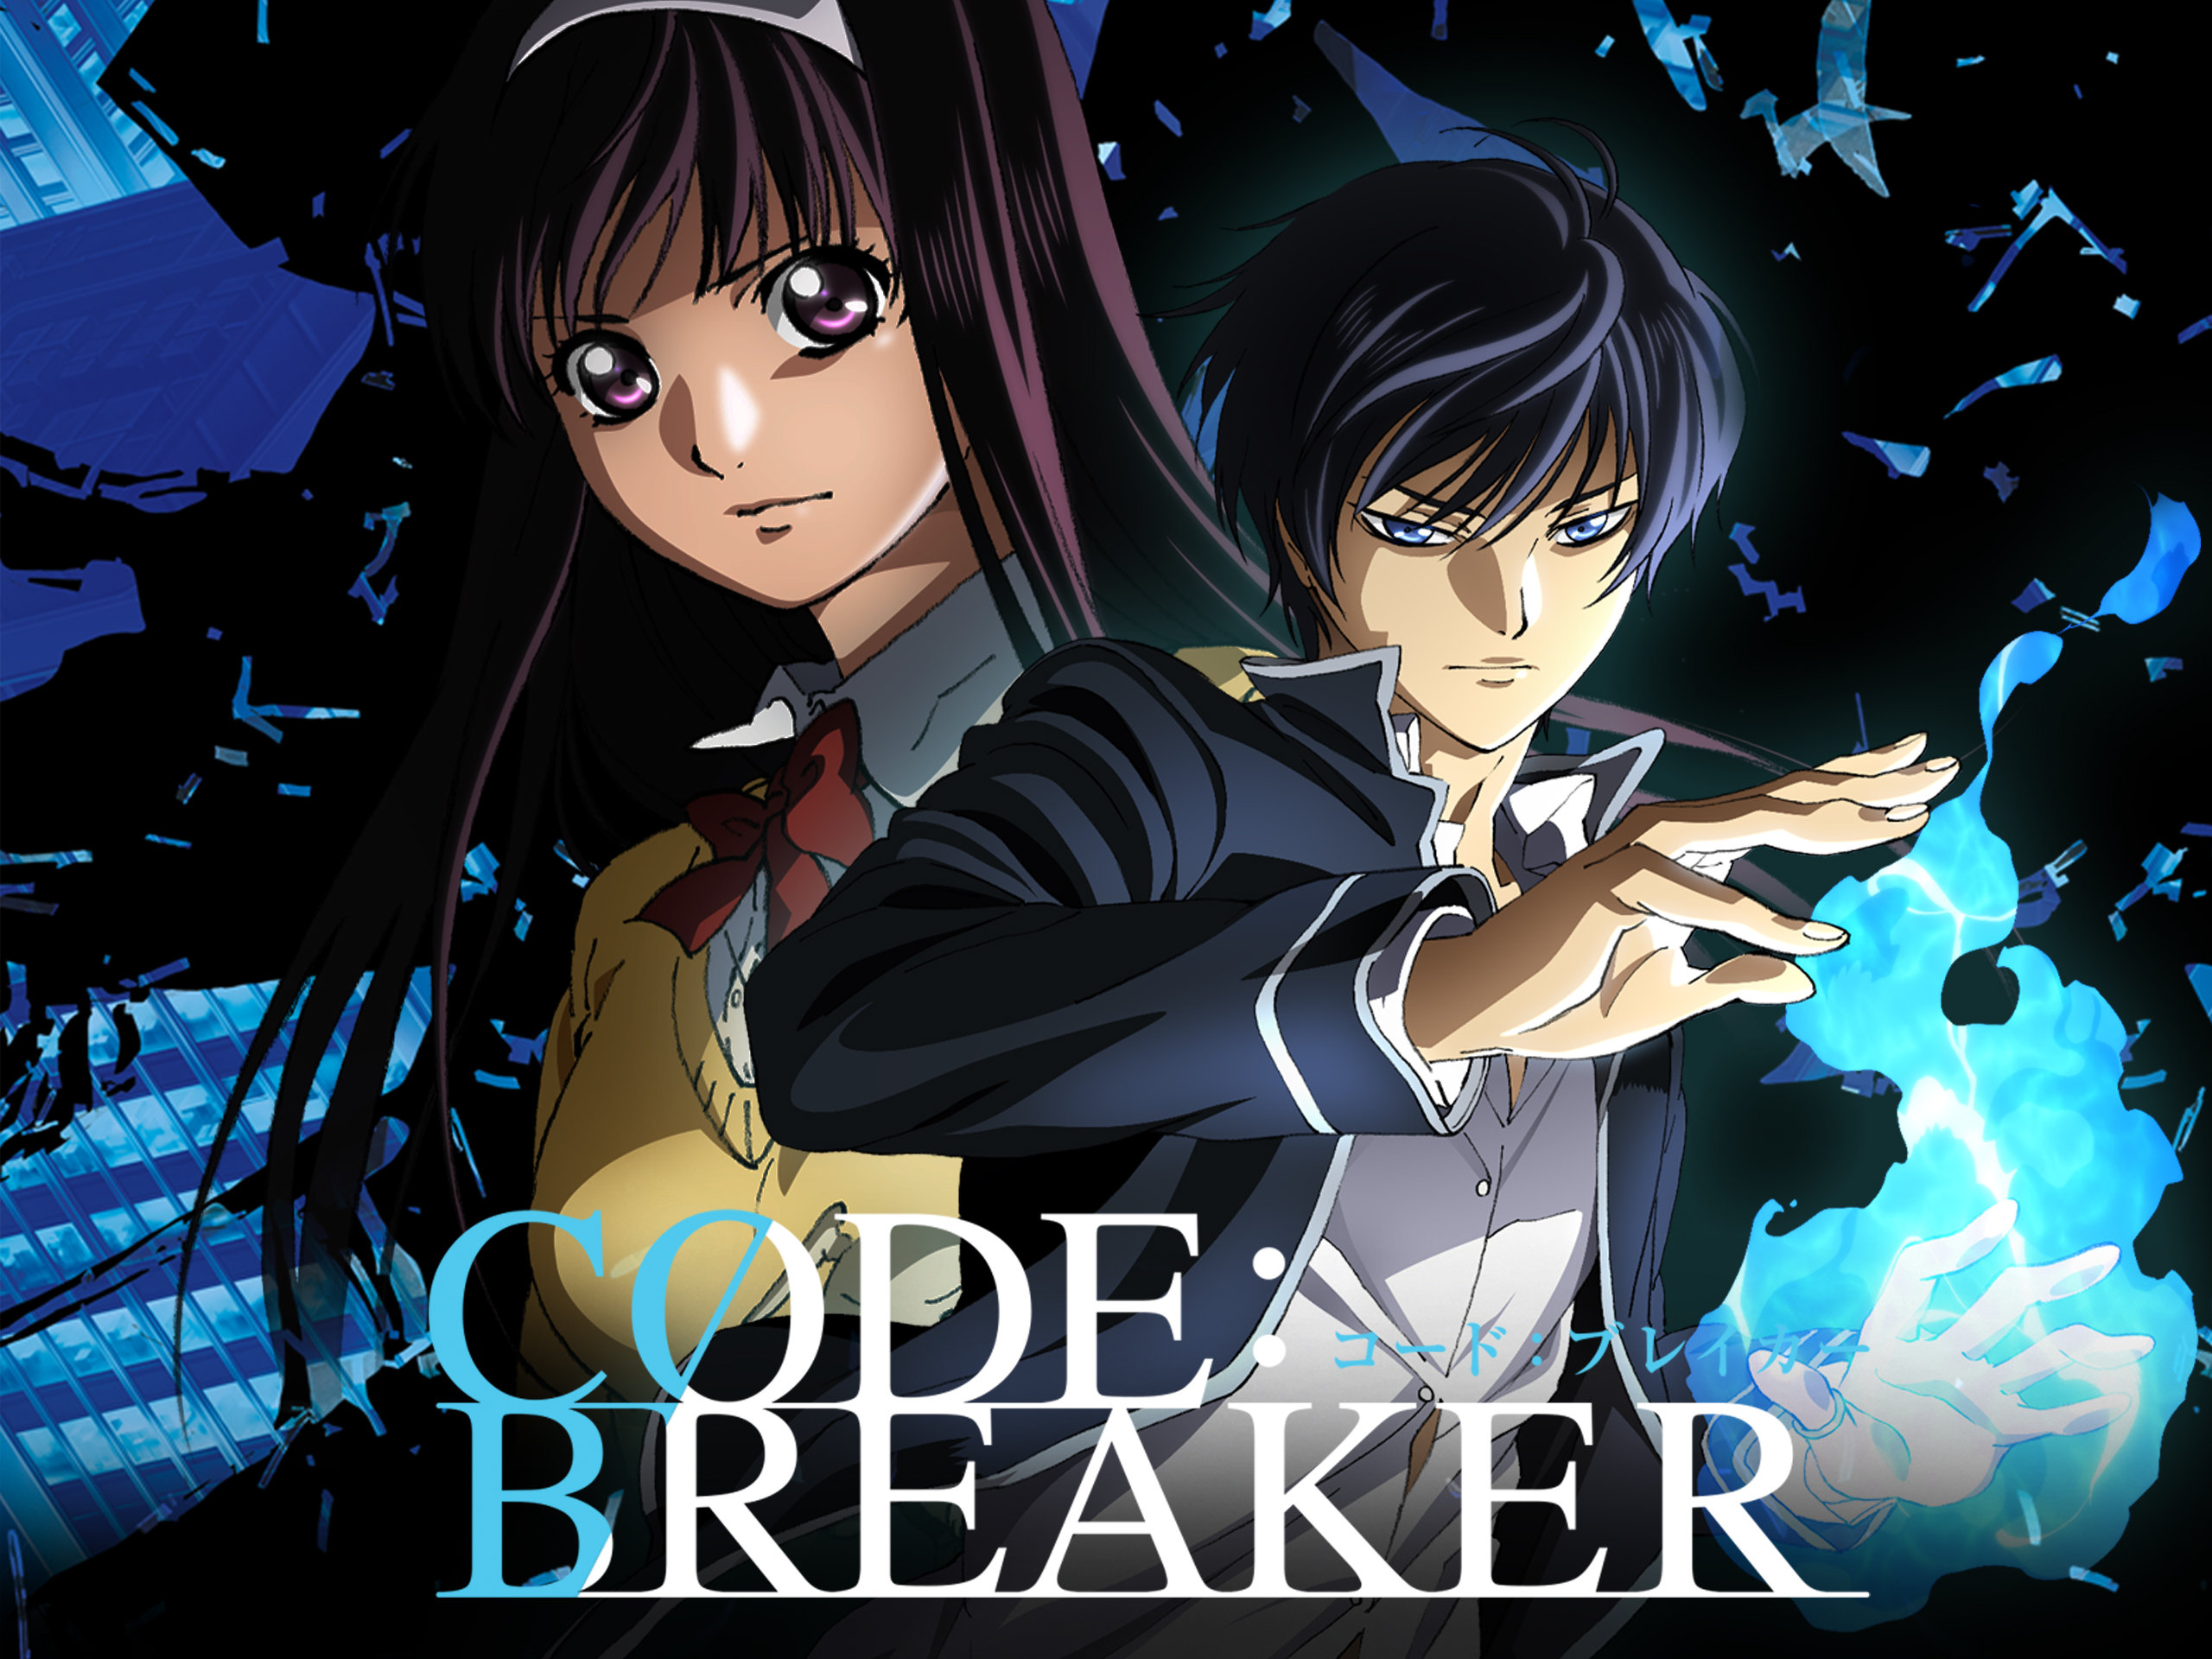 ben rasmussen recommends code breaker english dub pic